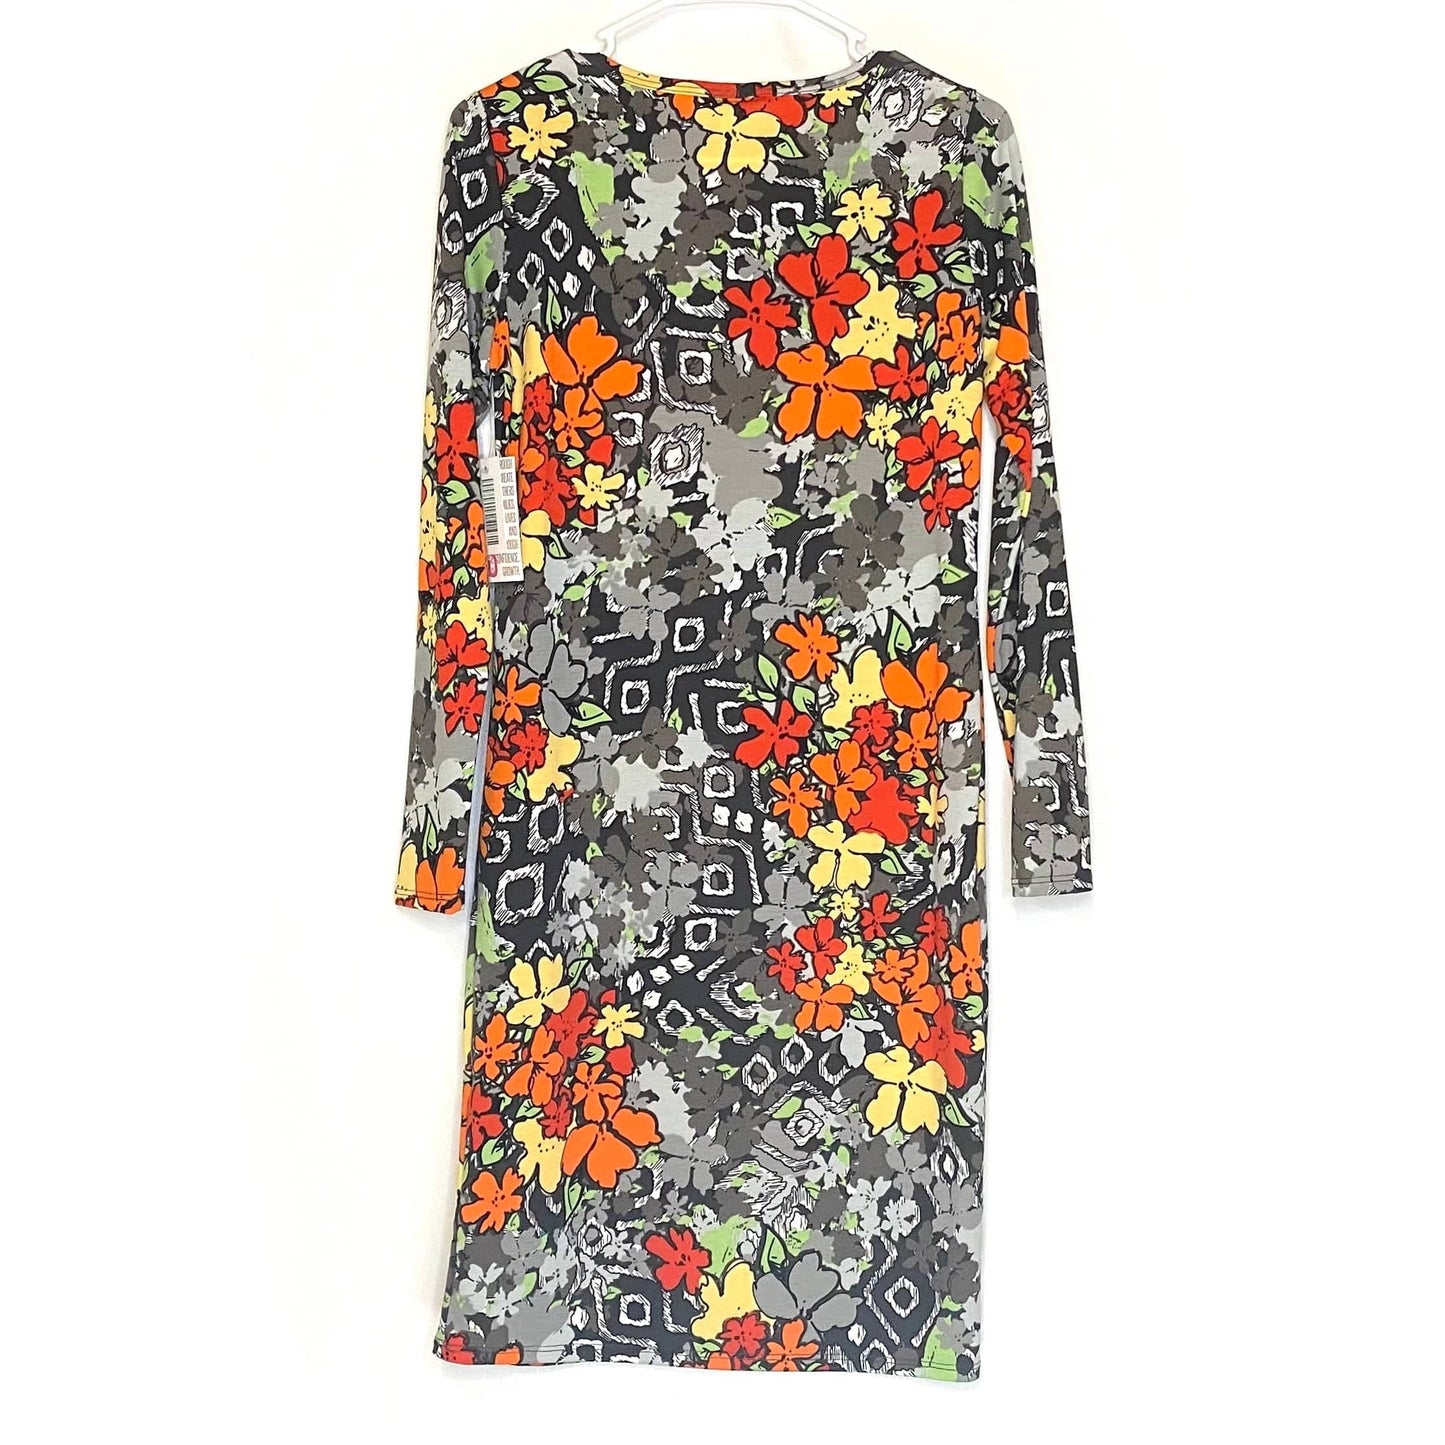 LuLaRoe Womens S ‘Debbie’ Orange/Gray/Black Abstract/Floral Dress NWT